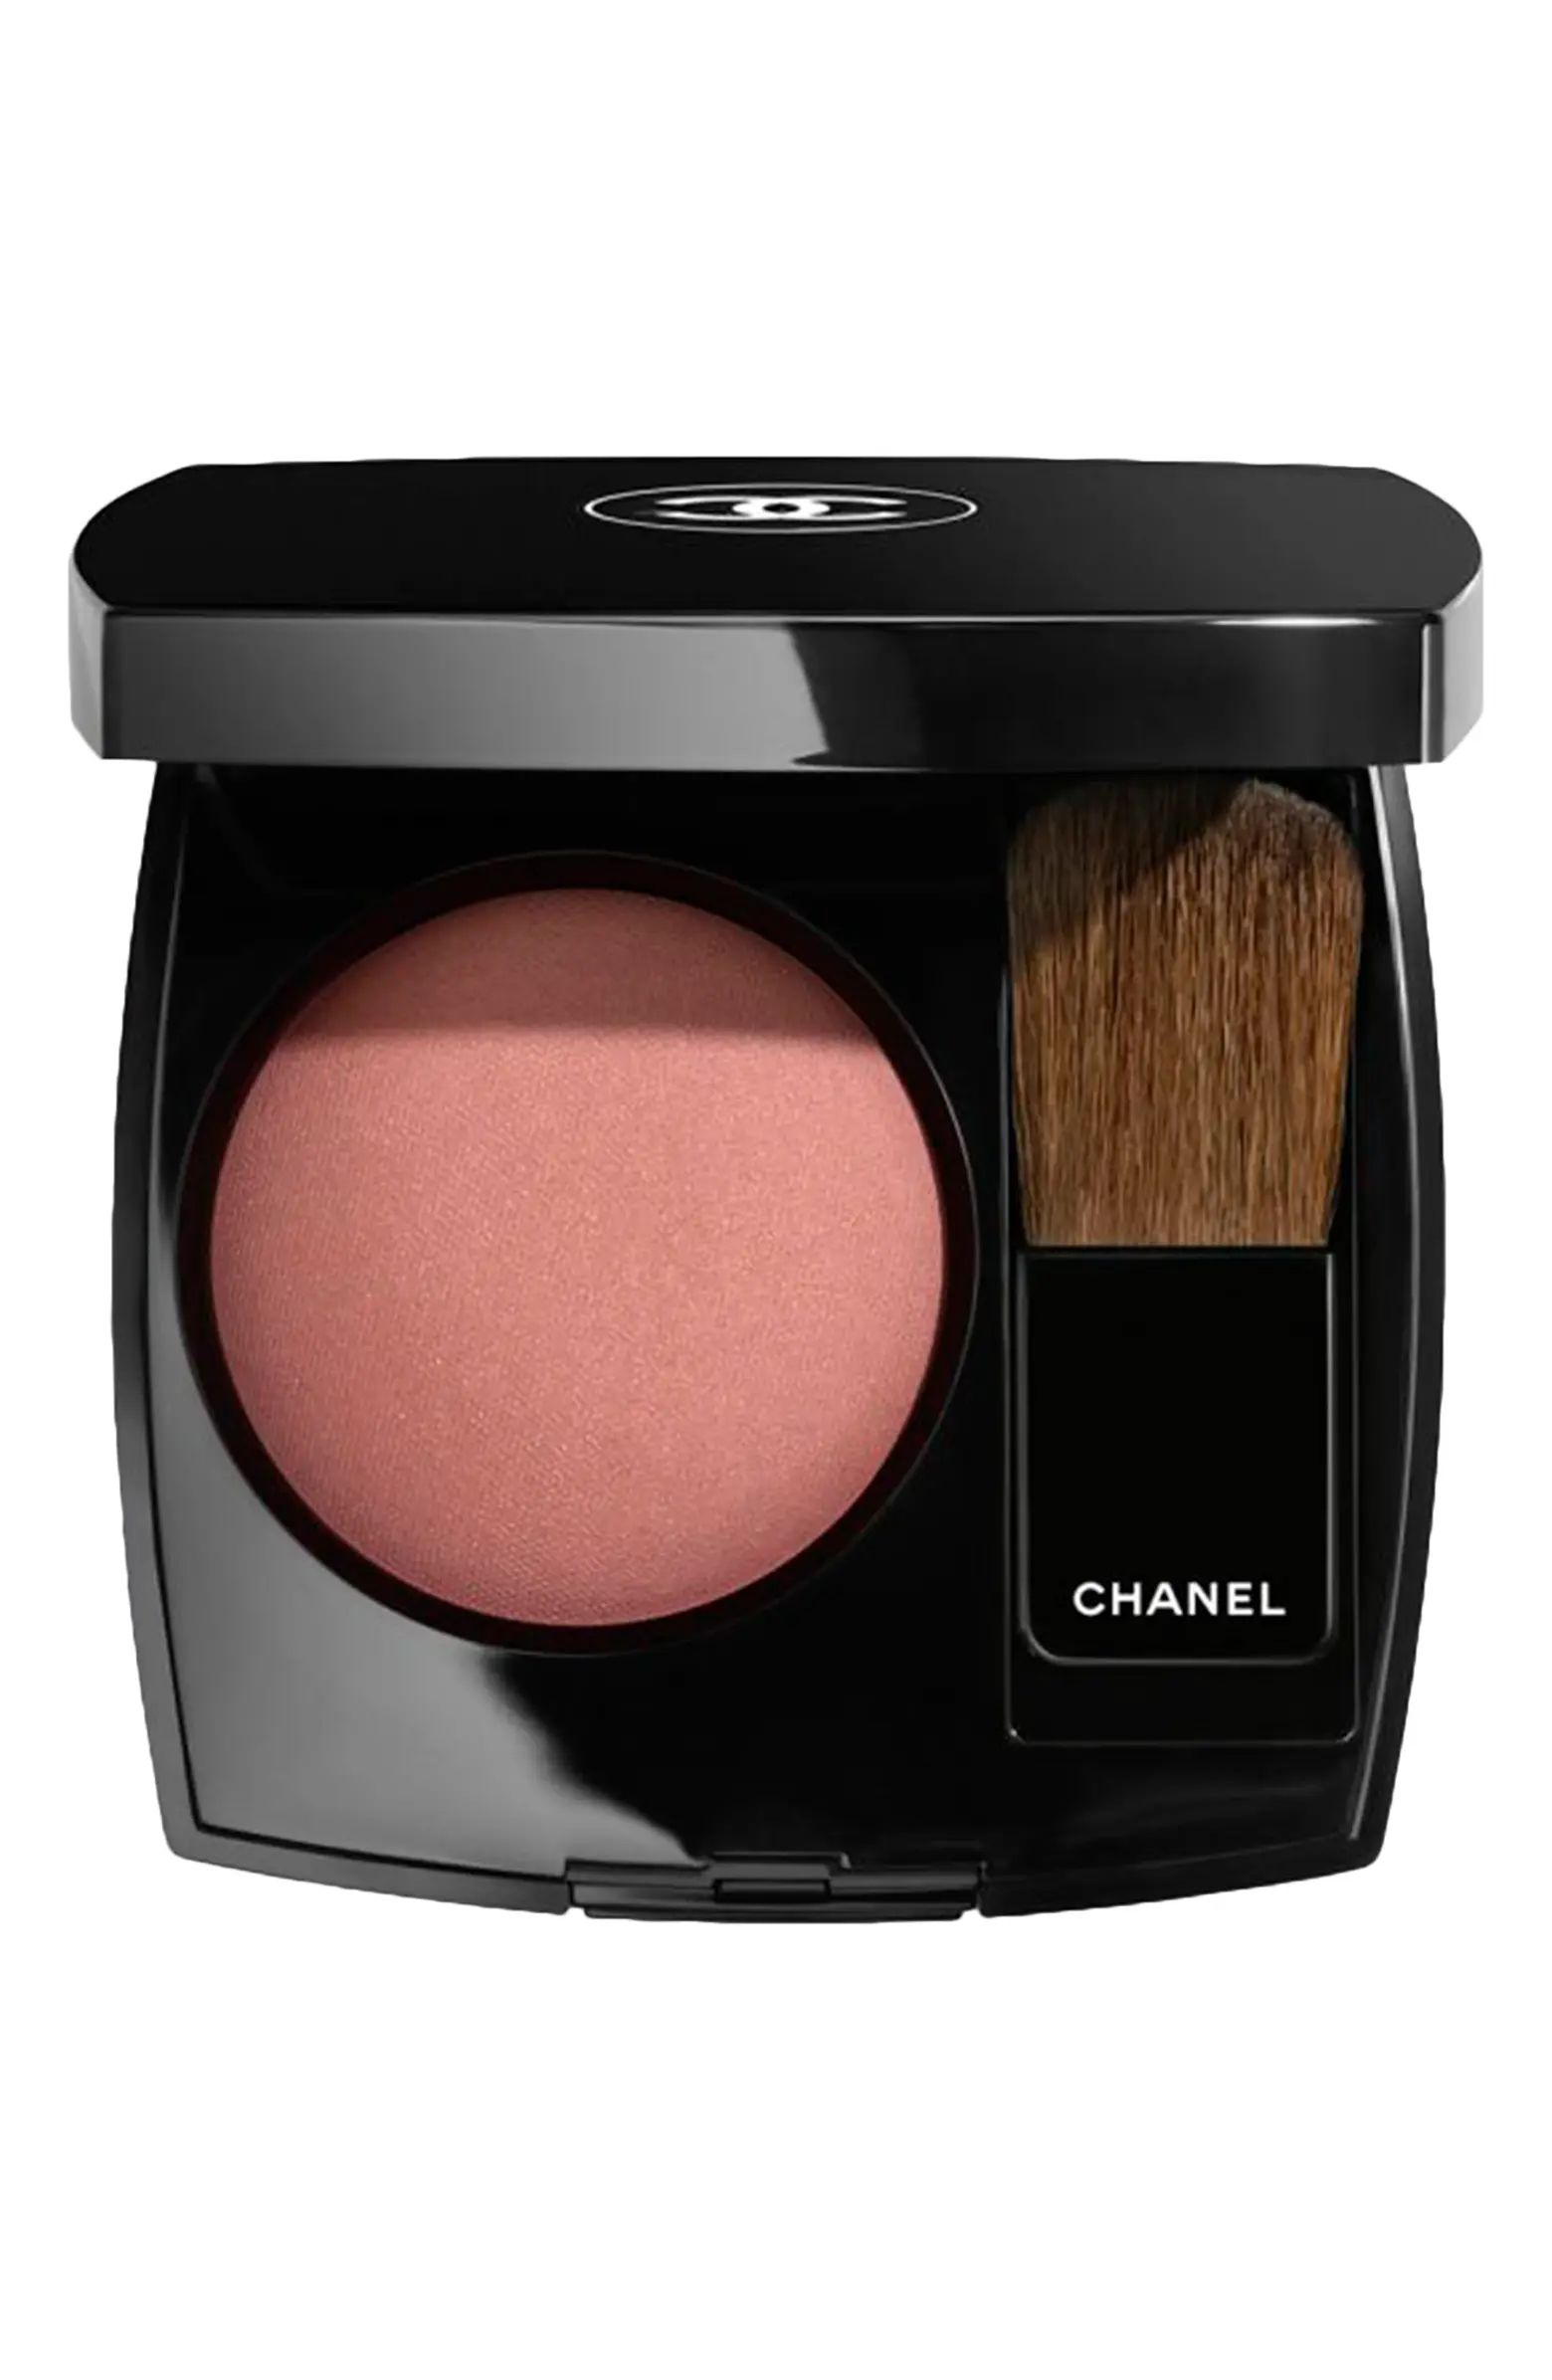 Shop Chanel Beauty Online | Nordstrom | Nordstrom